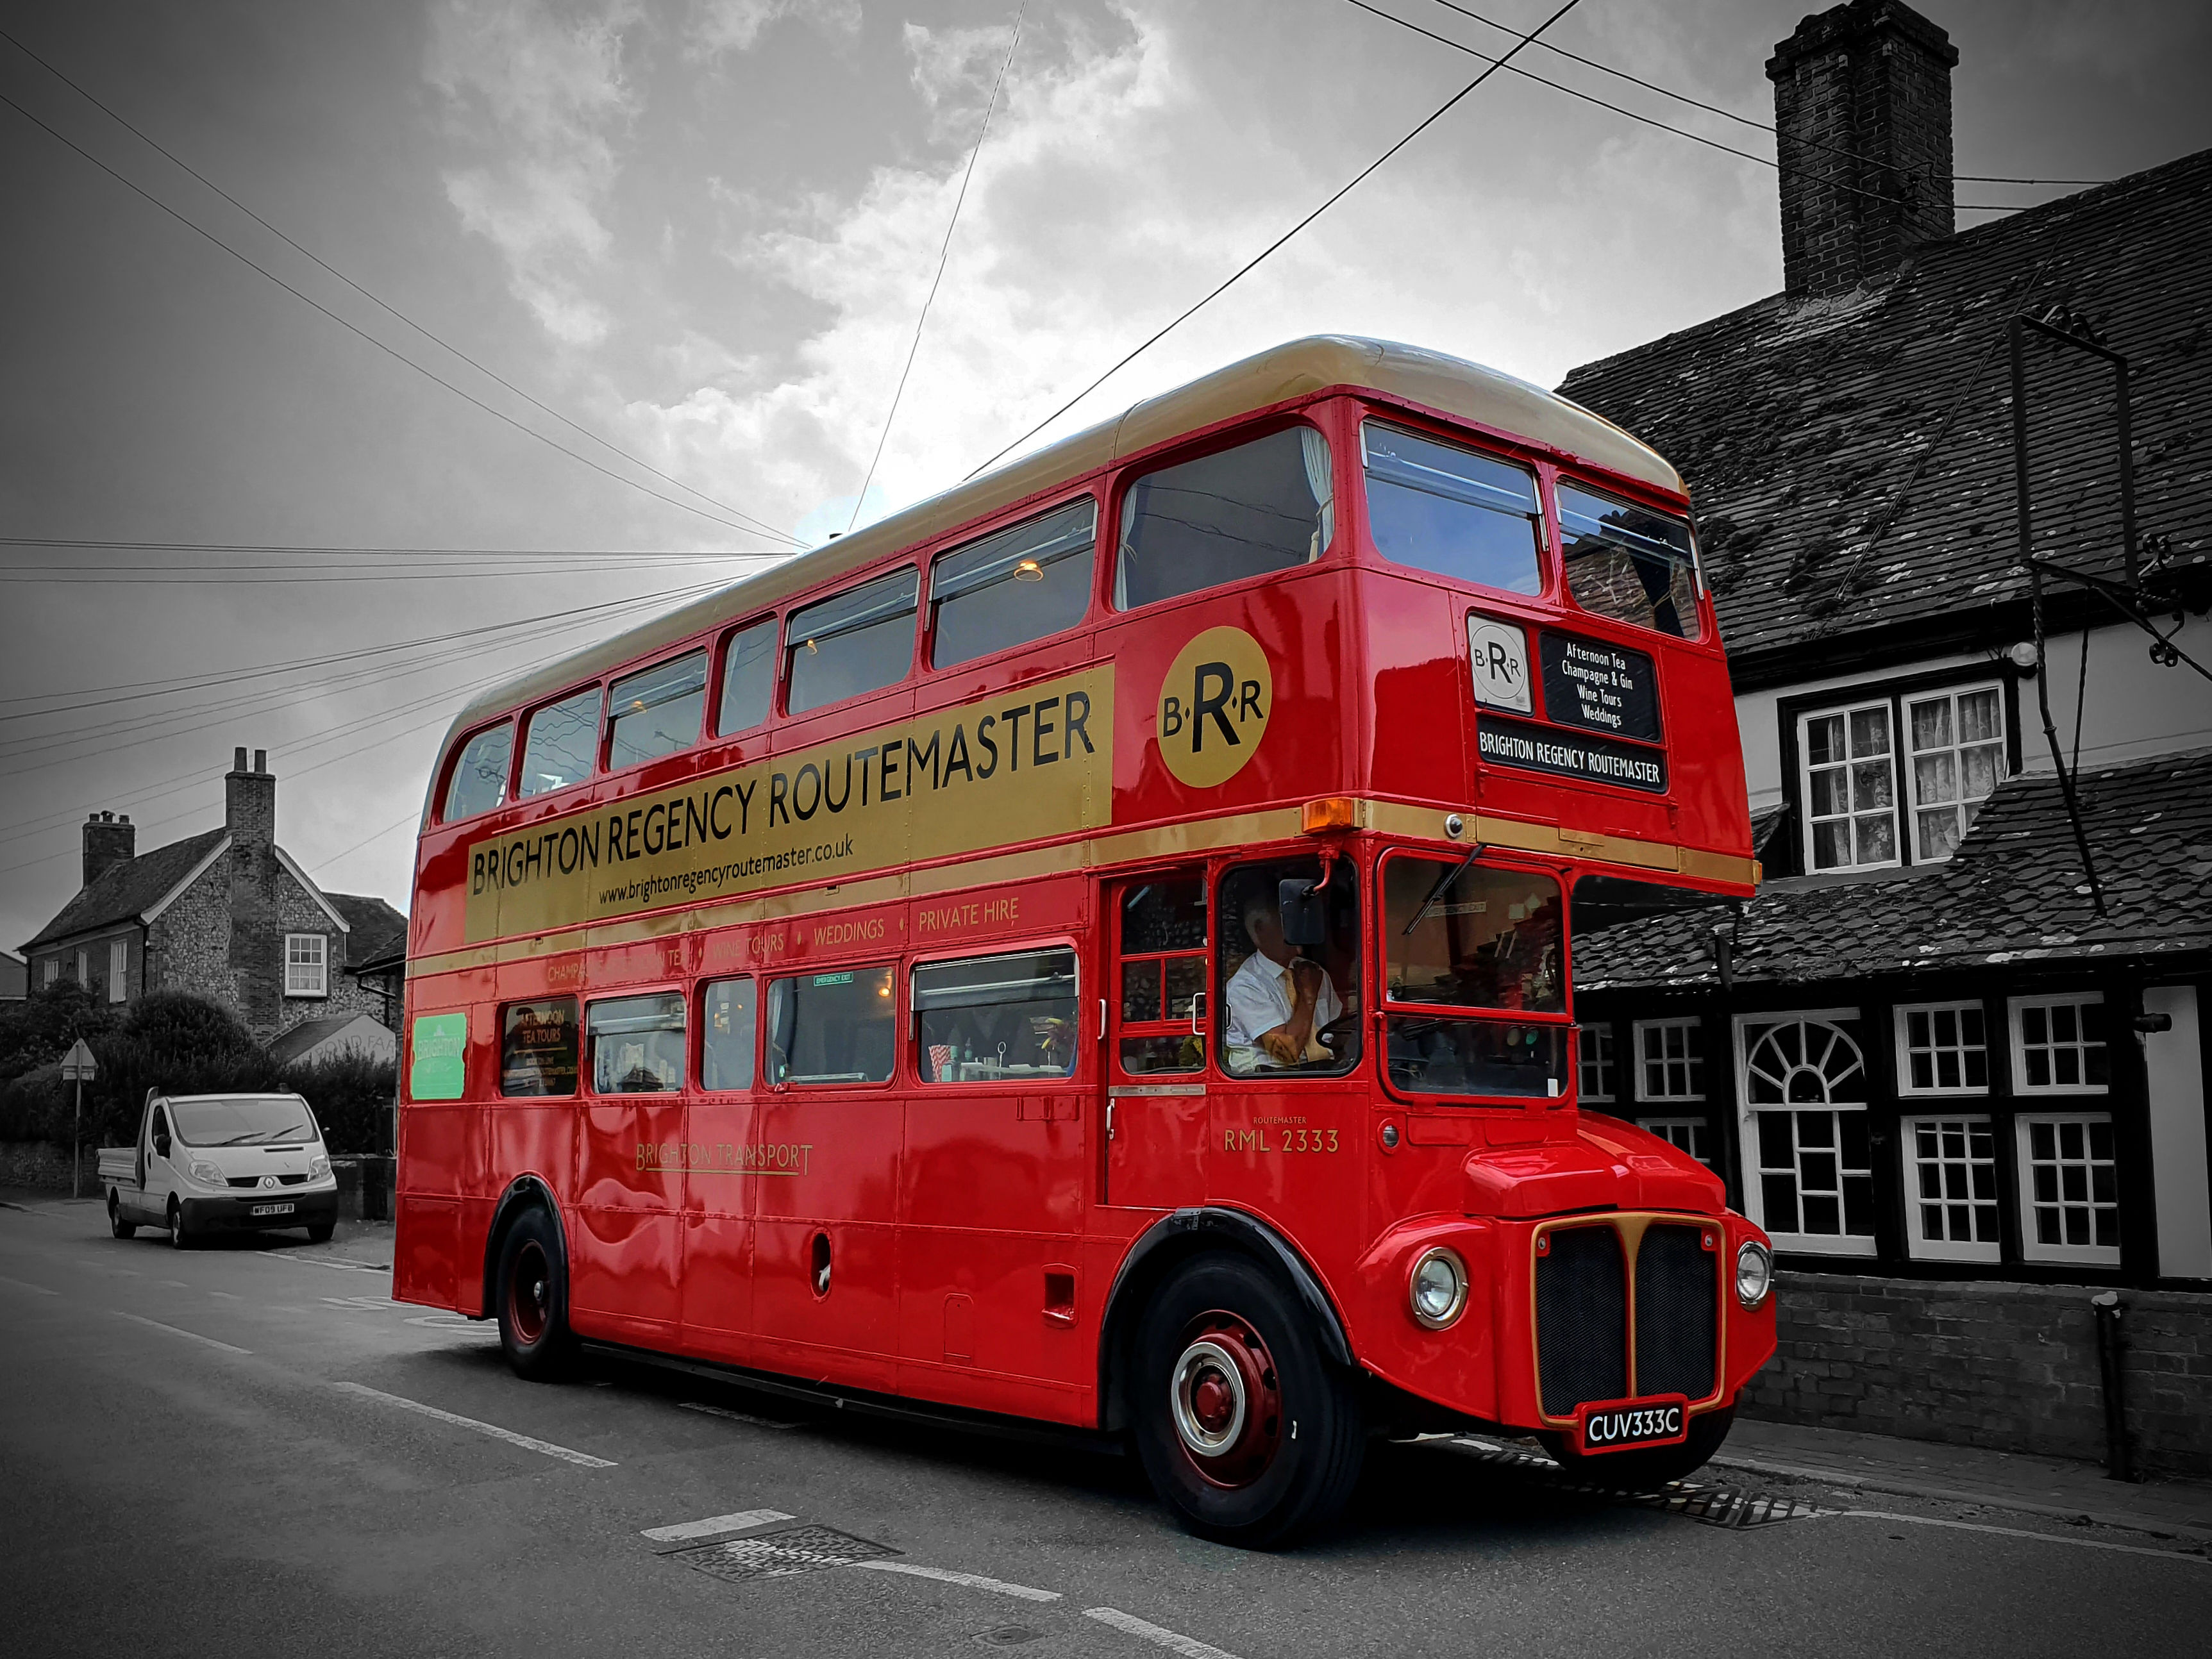 Brighton Regency Routemaster - Big Red Bus in Brighton